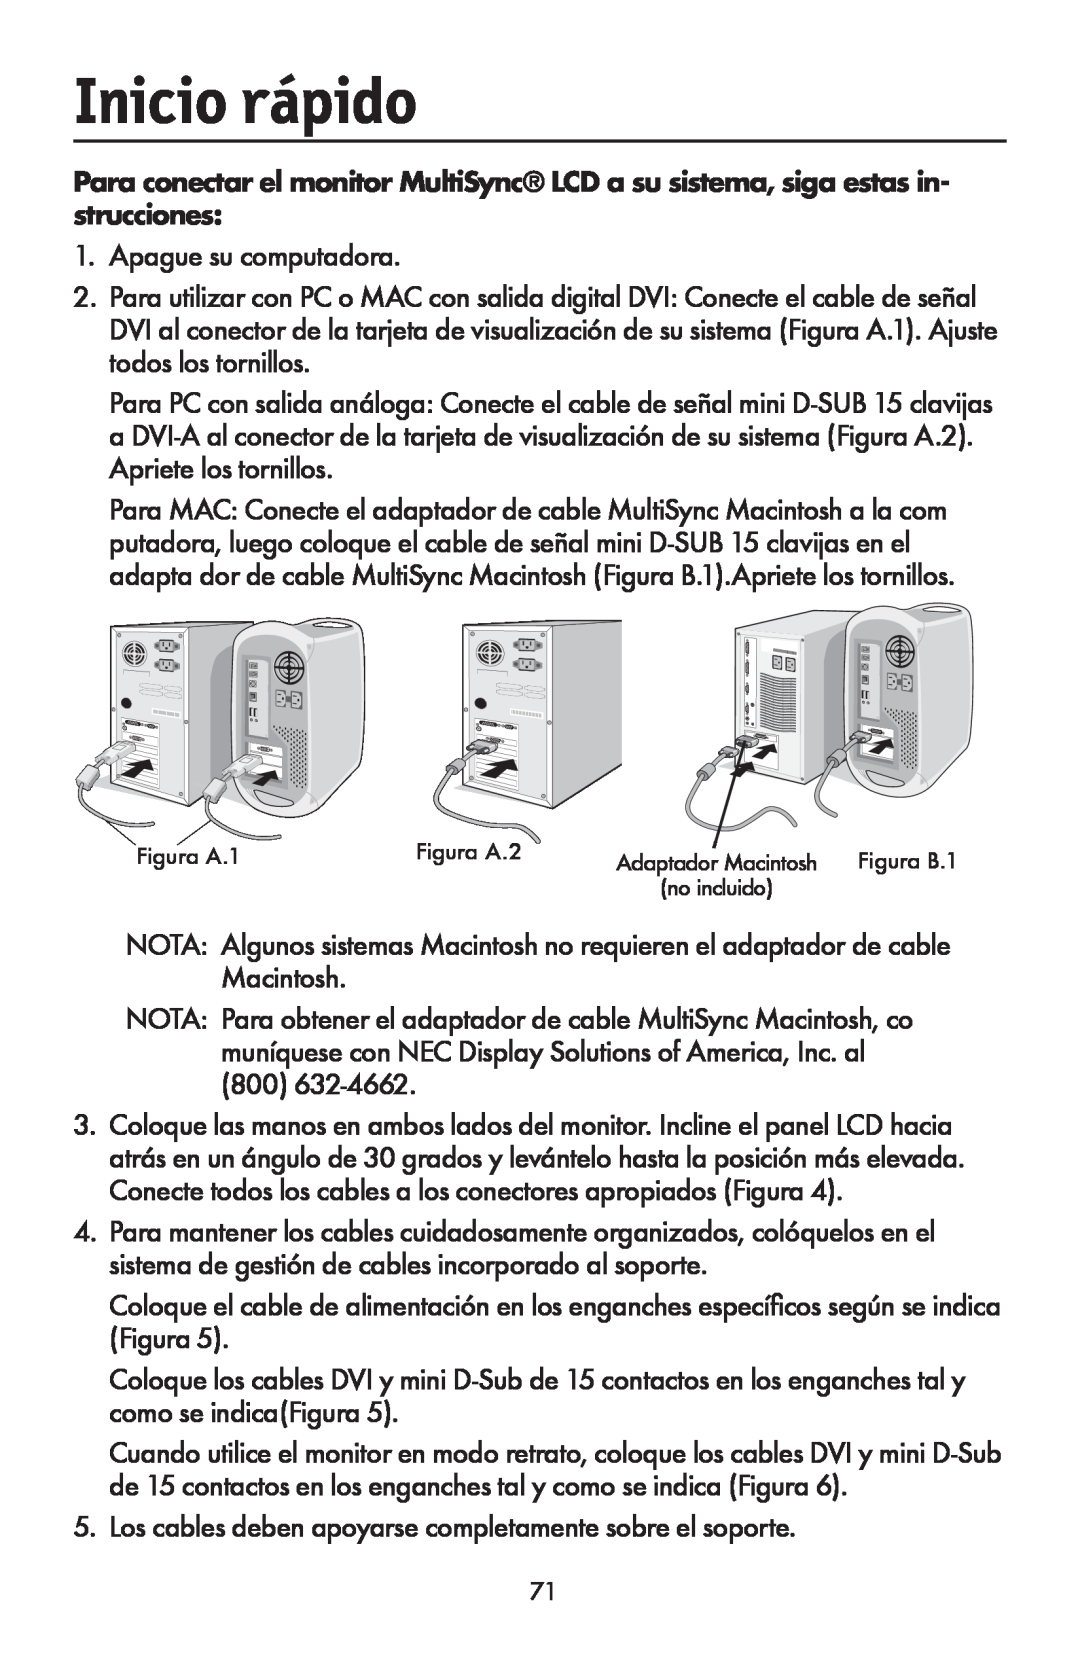 NEC LCD1990FXTM user manual Inicio rápido, Figura A.1, Figura A.2, Figura B.1 